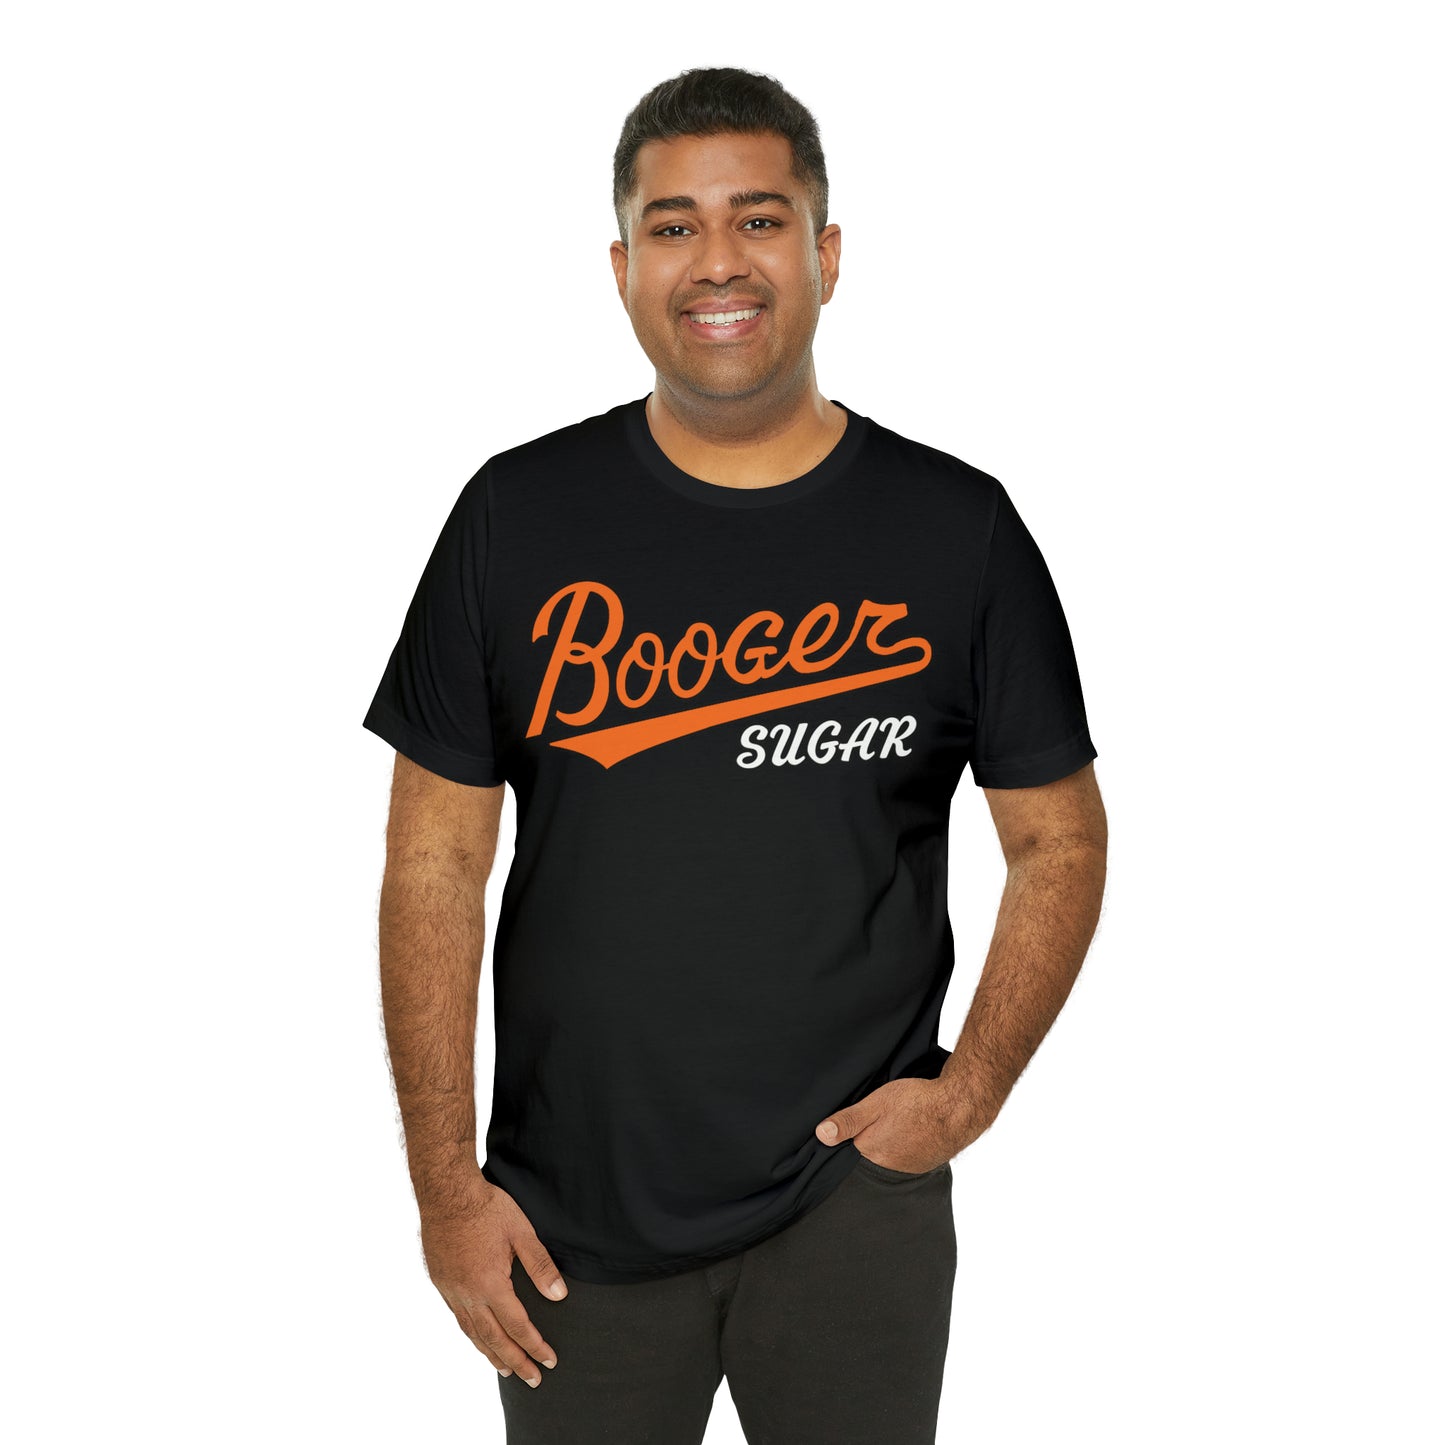 Booger Sugar Baltimore Orioles Baseball Style Funny Tee